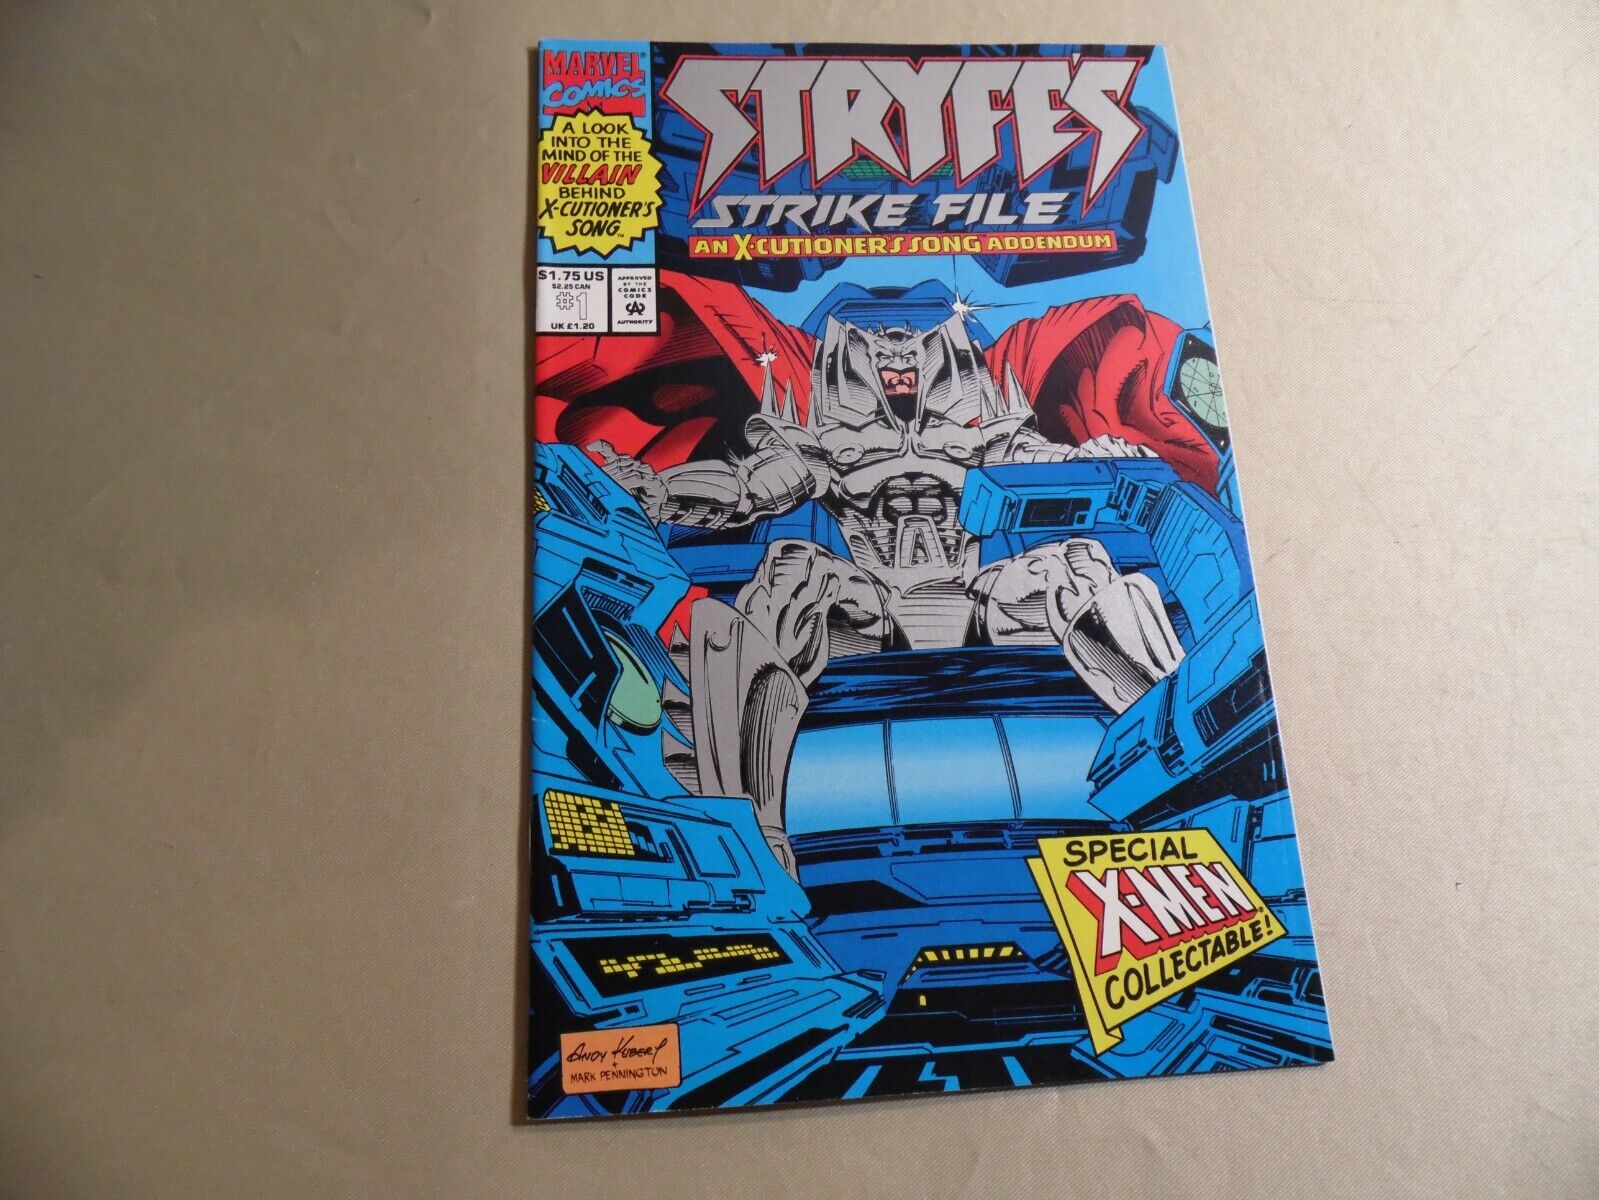 Stryfe\'s Strike File #1 (Marvel Comics 1993) Free Domestic Shipping